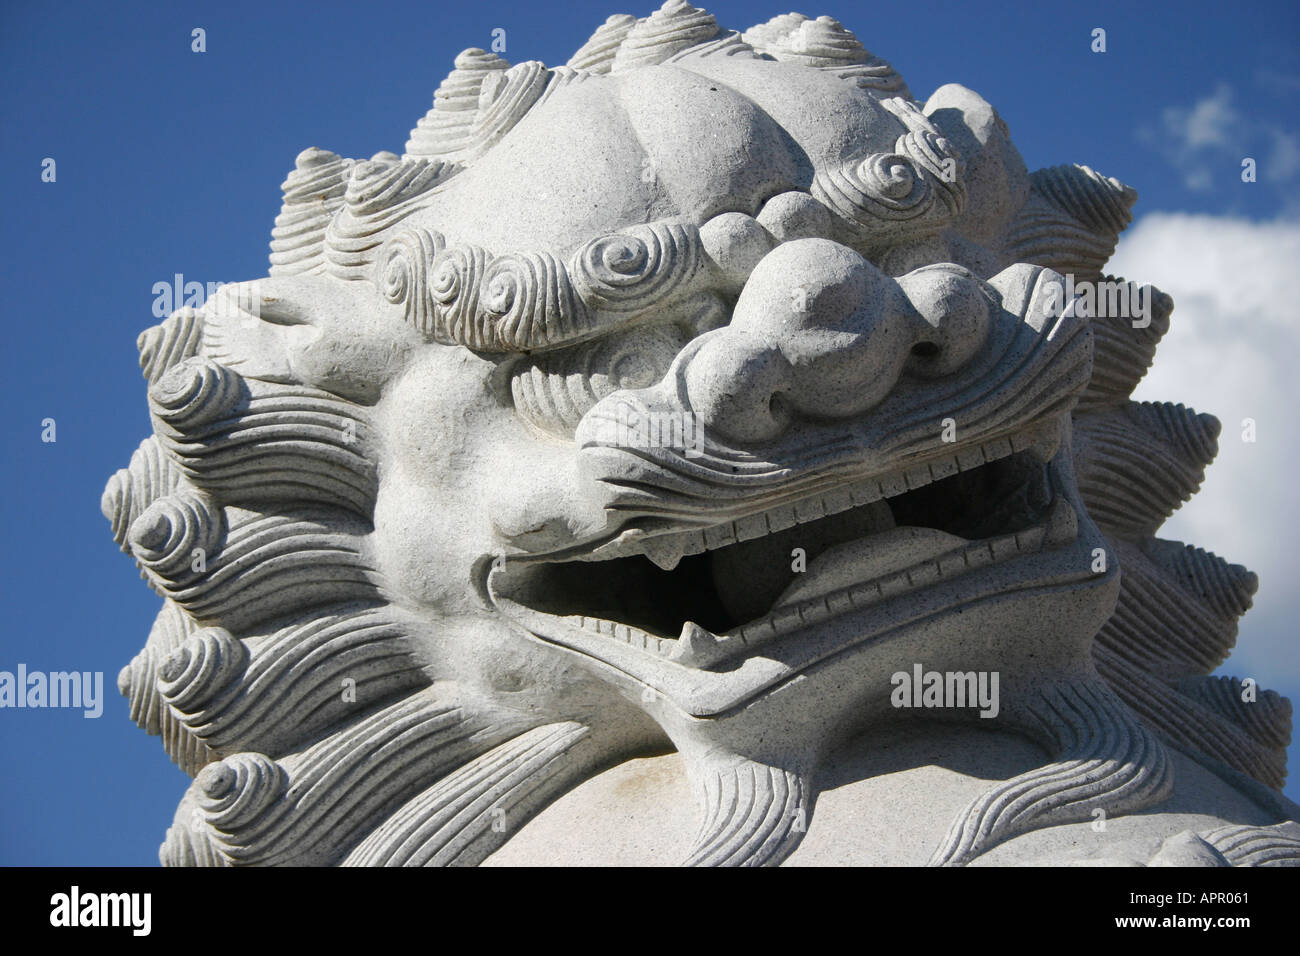 https://c8.alamy.com/comp/APR061/head-of-chinese-dragon-statue-APR061.jpg